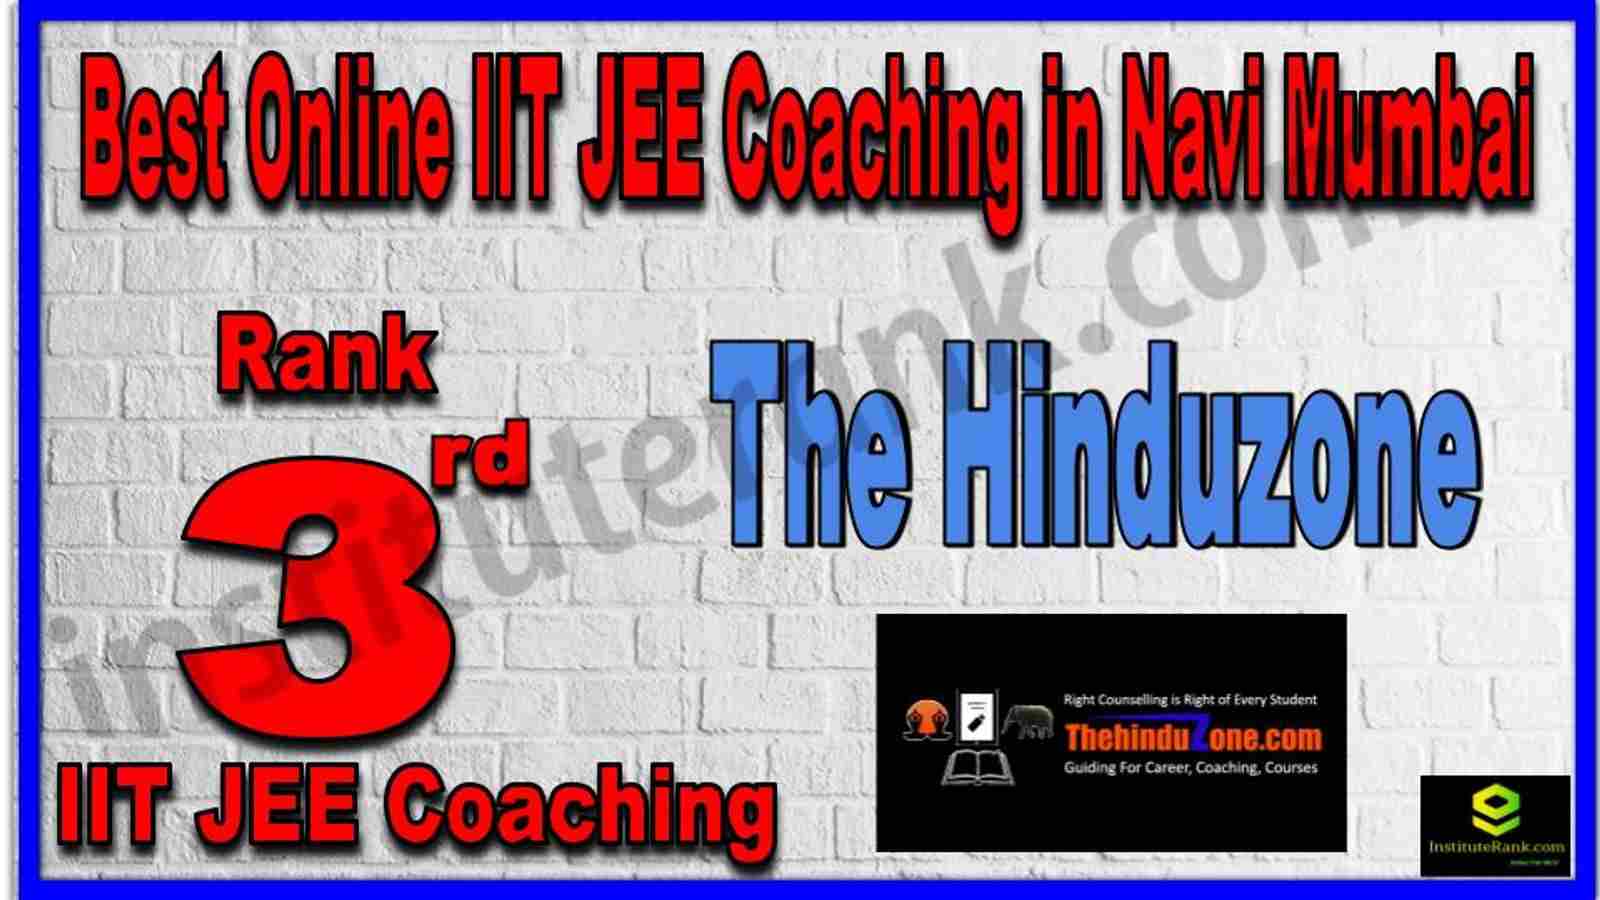 Rank 3rd Best Online IIT JEE Coaching in Navi Mumbai